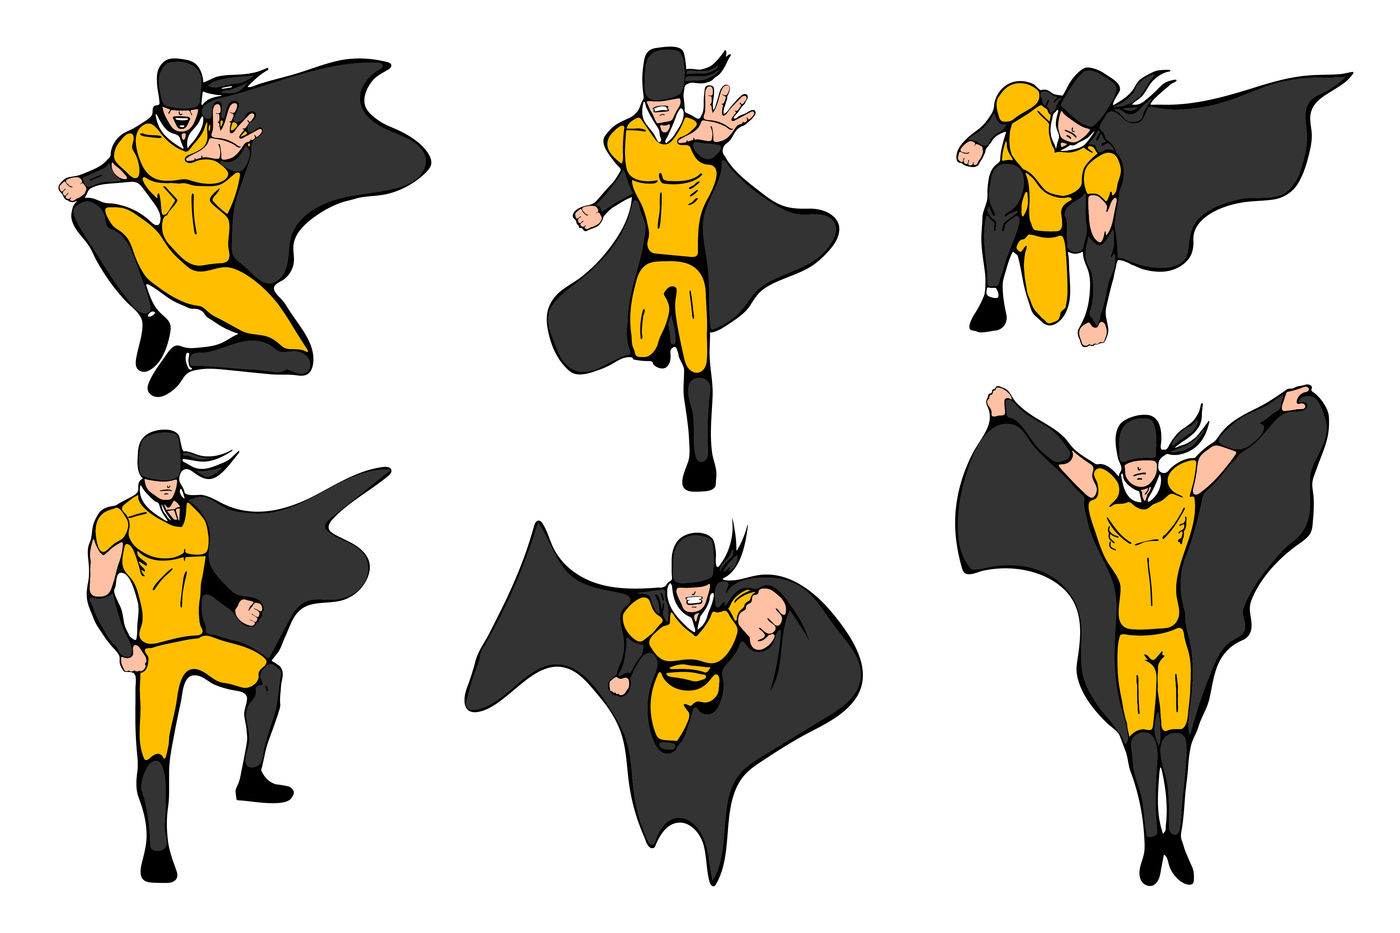 Superhero models in various poses. By ExpressShop | TheHungryJPEG